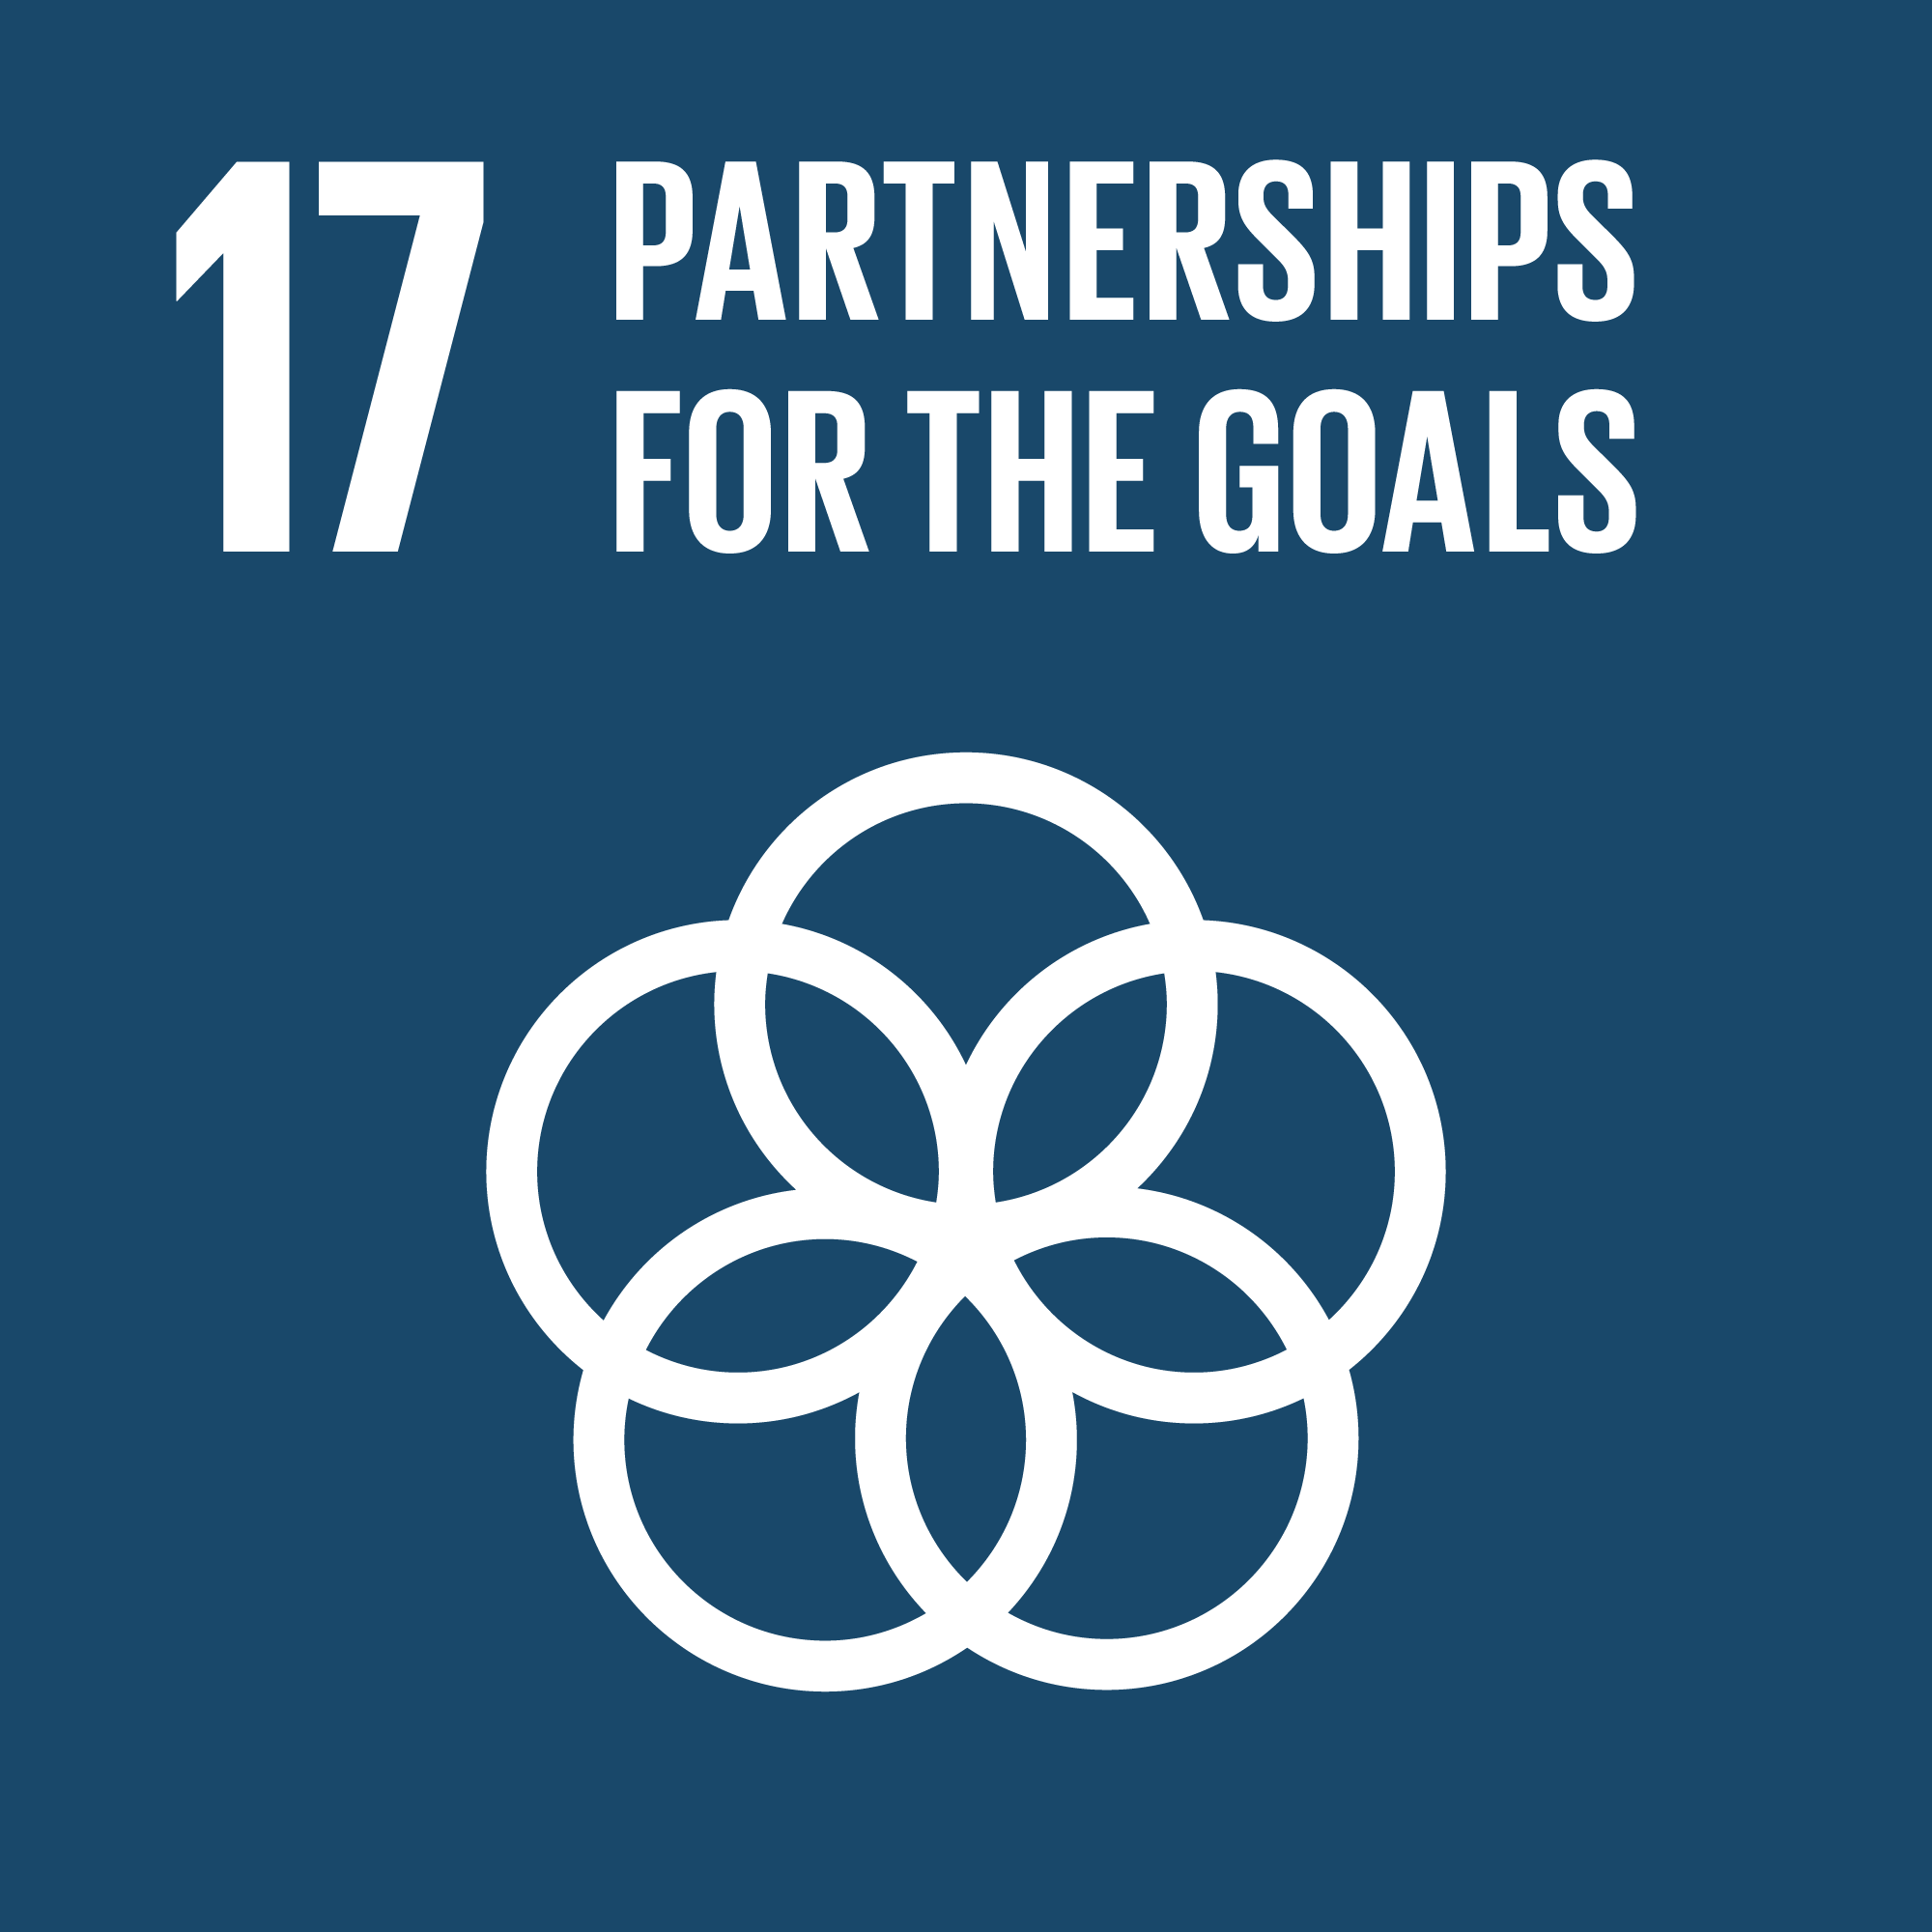 Sustainable Development Goal 17: Partnerships for the Goals